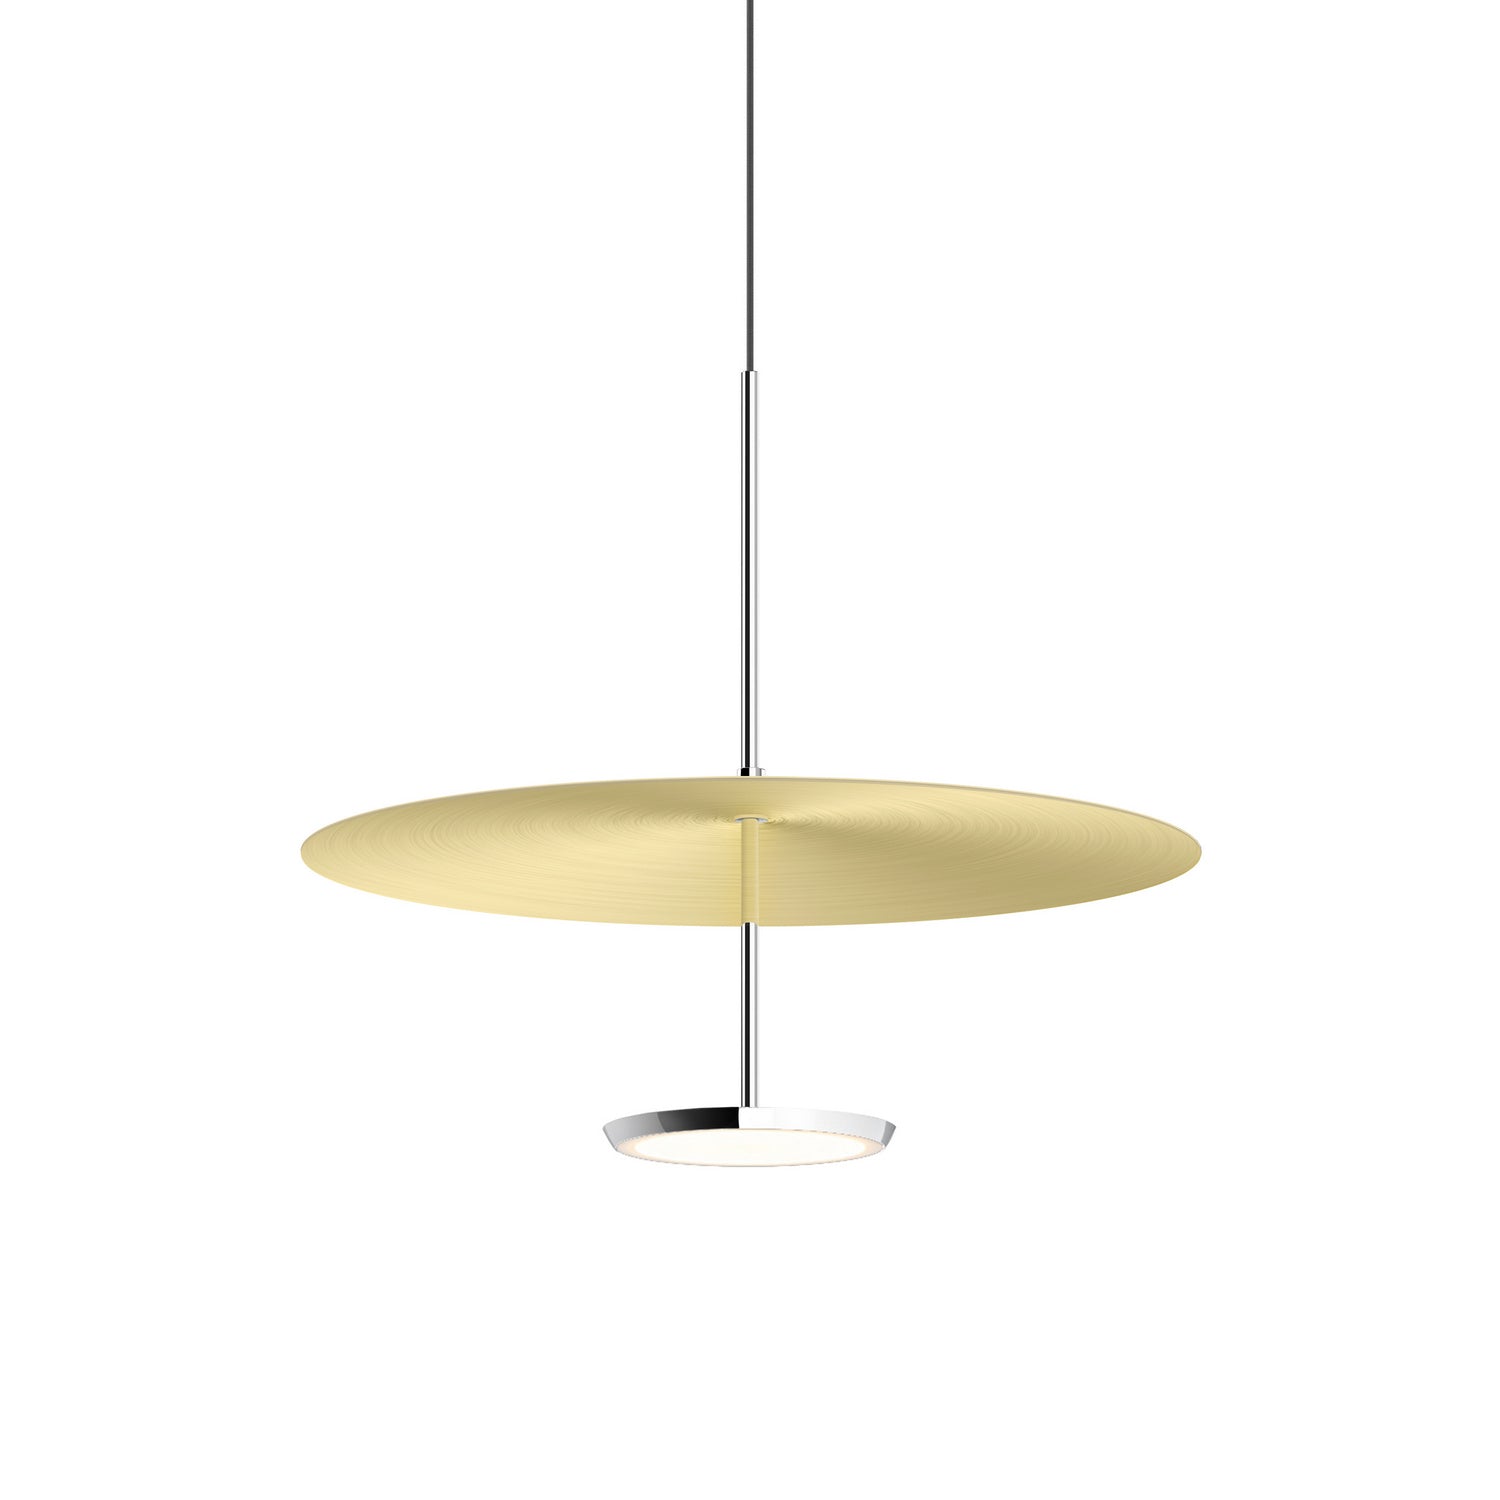 Pablo Designs - LED Pendant - Sky - Brass/Chrome- Union Lighting Luminaires Decor